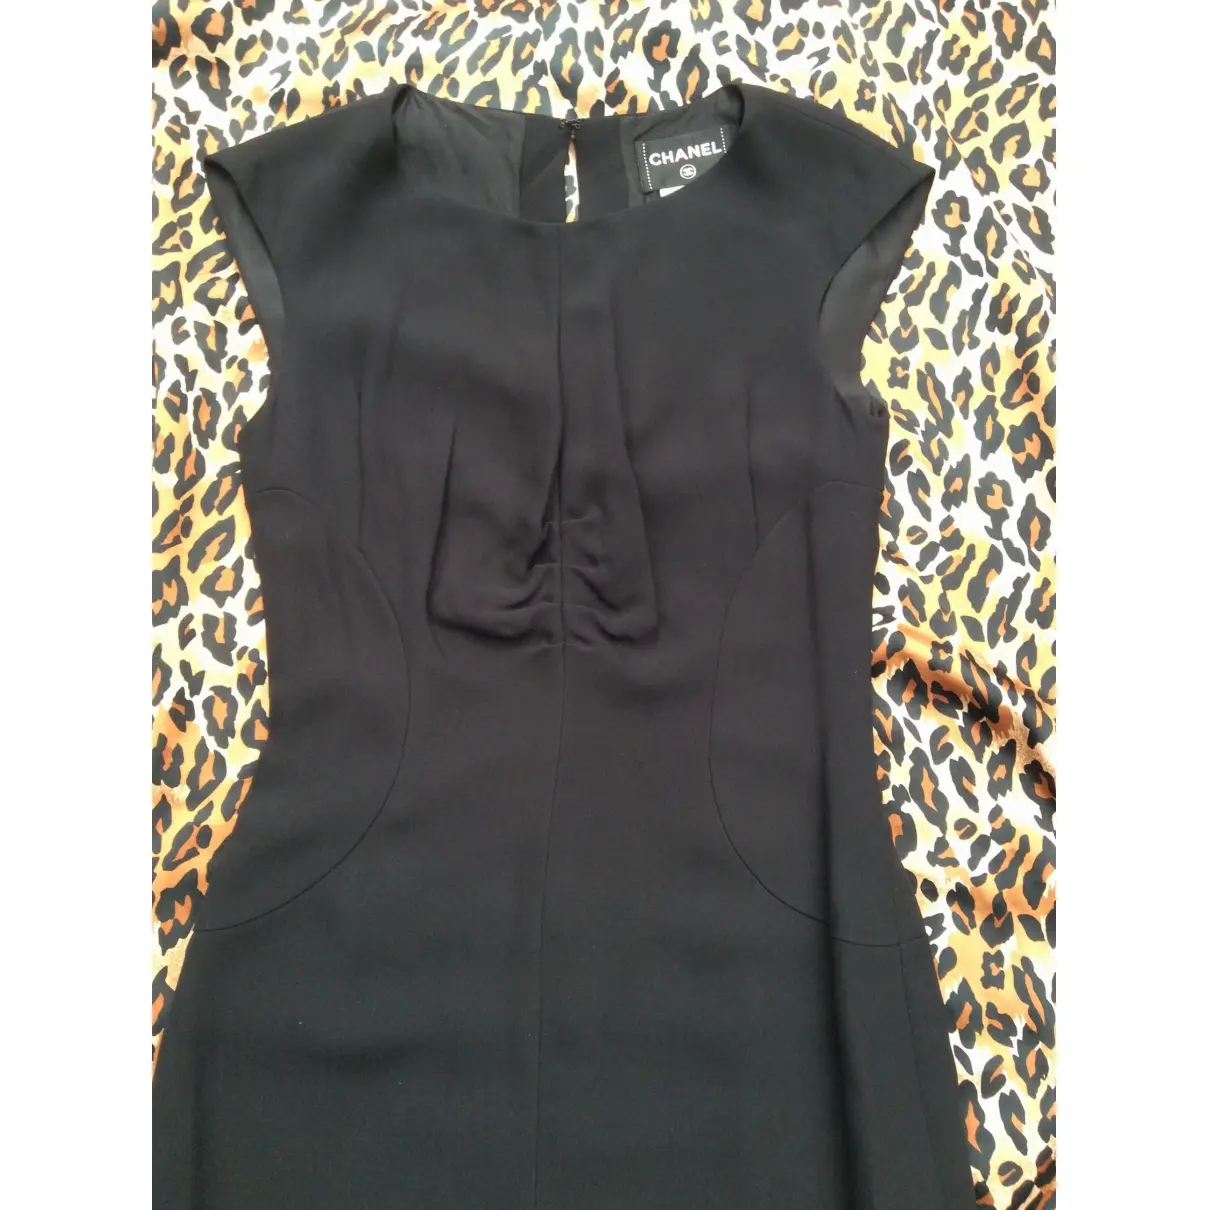 Chanel Silk mid-length dress for sale - Vintage